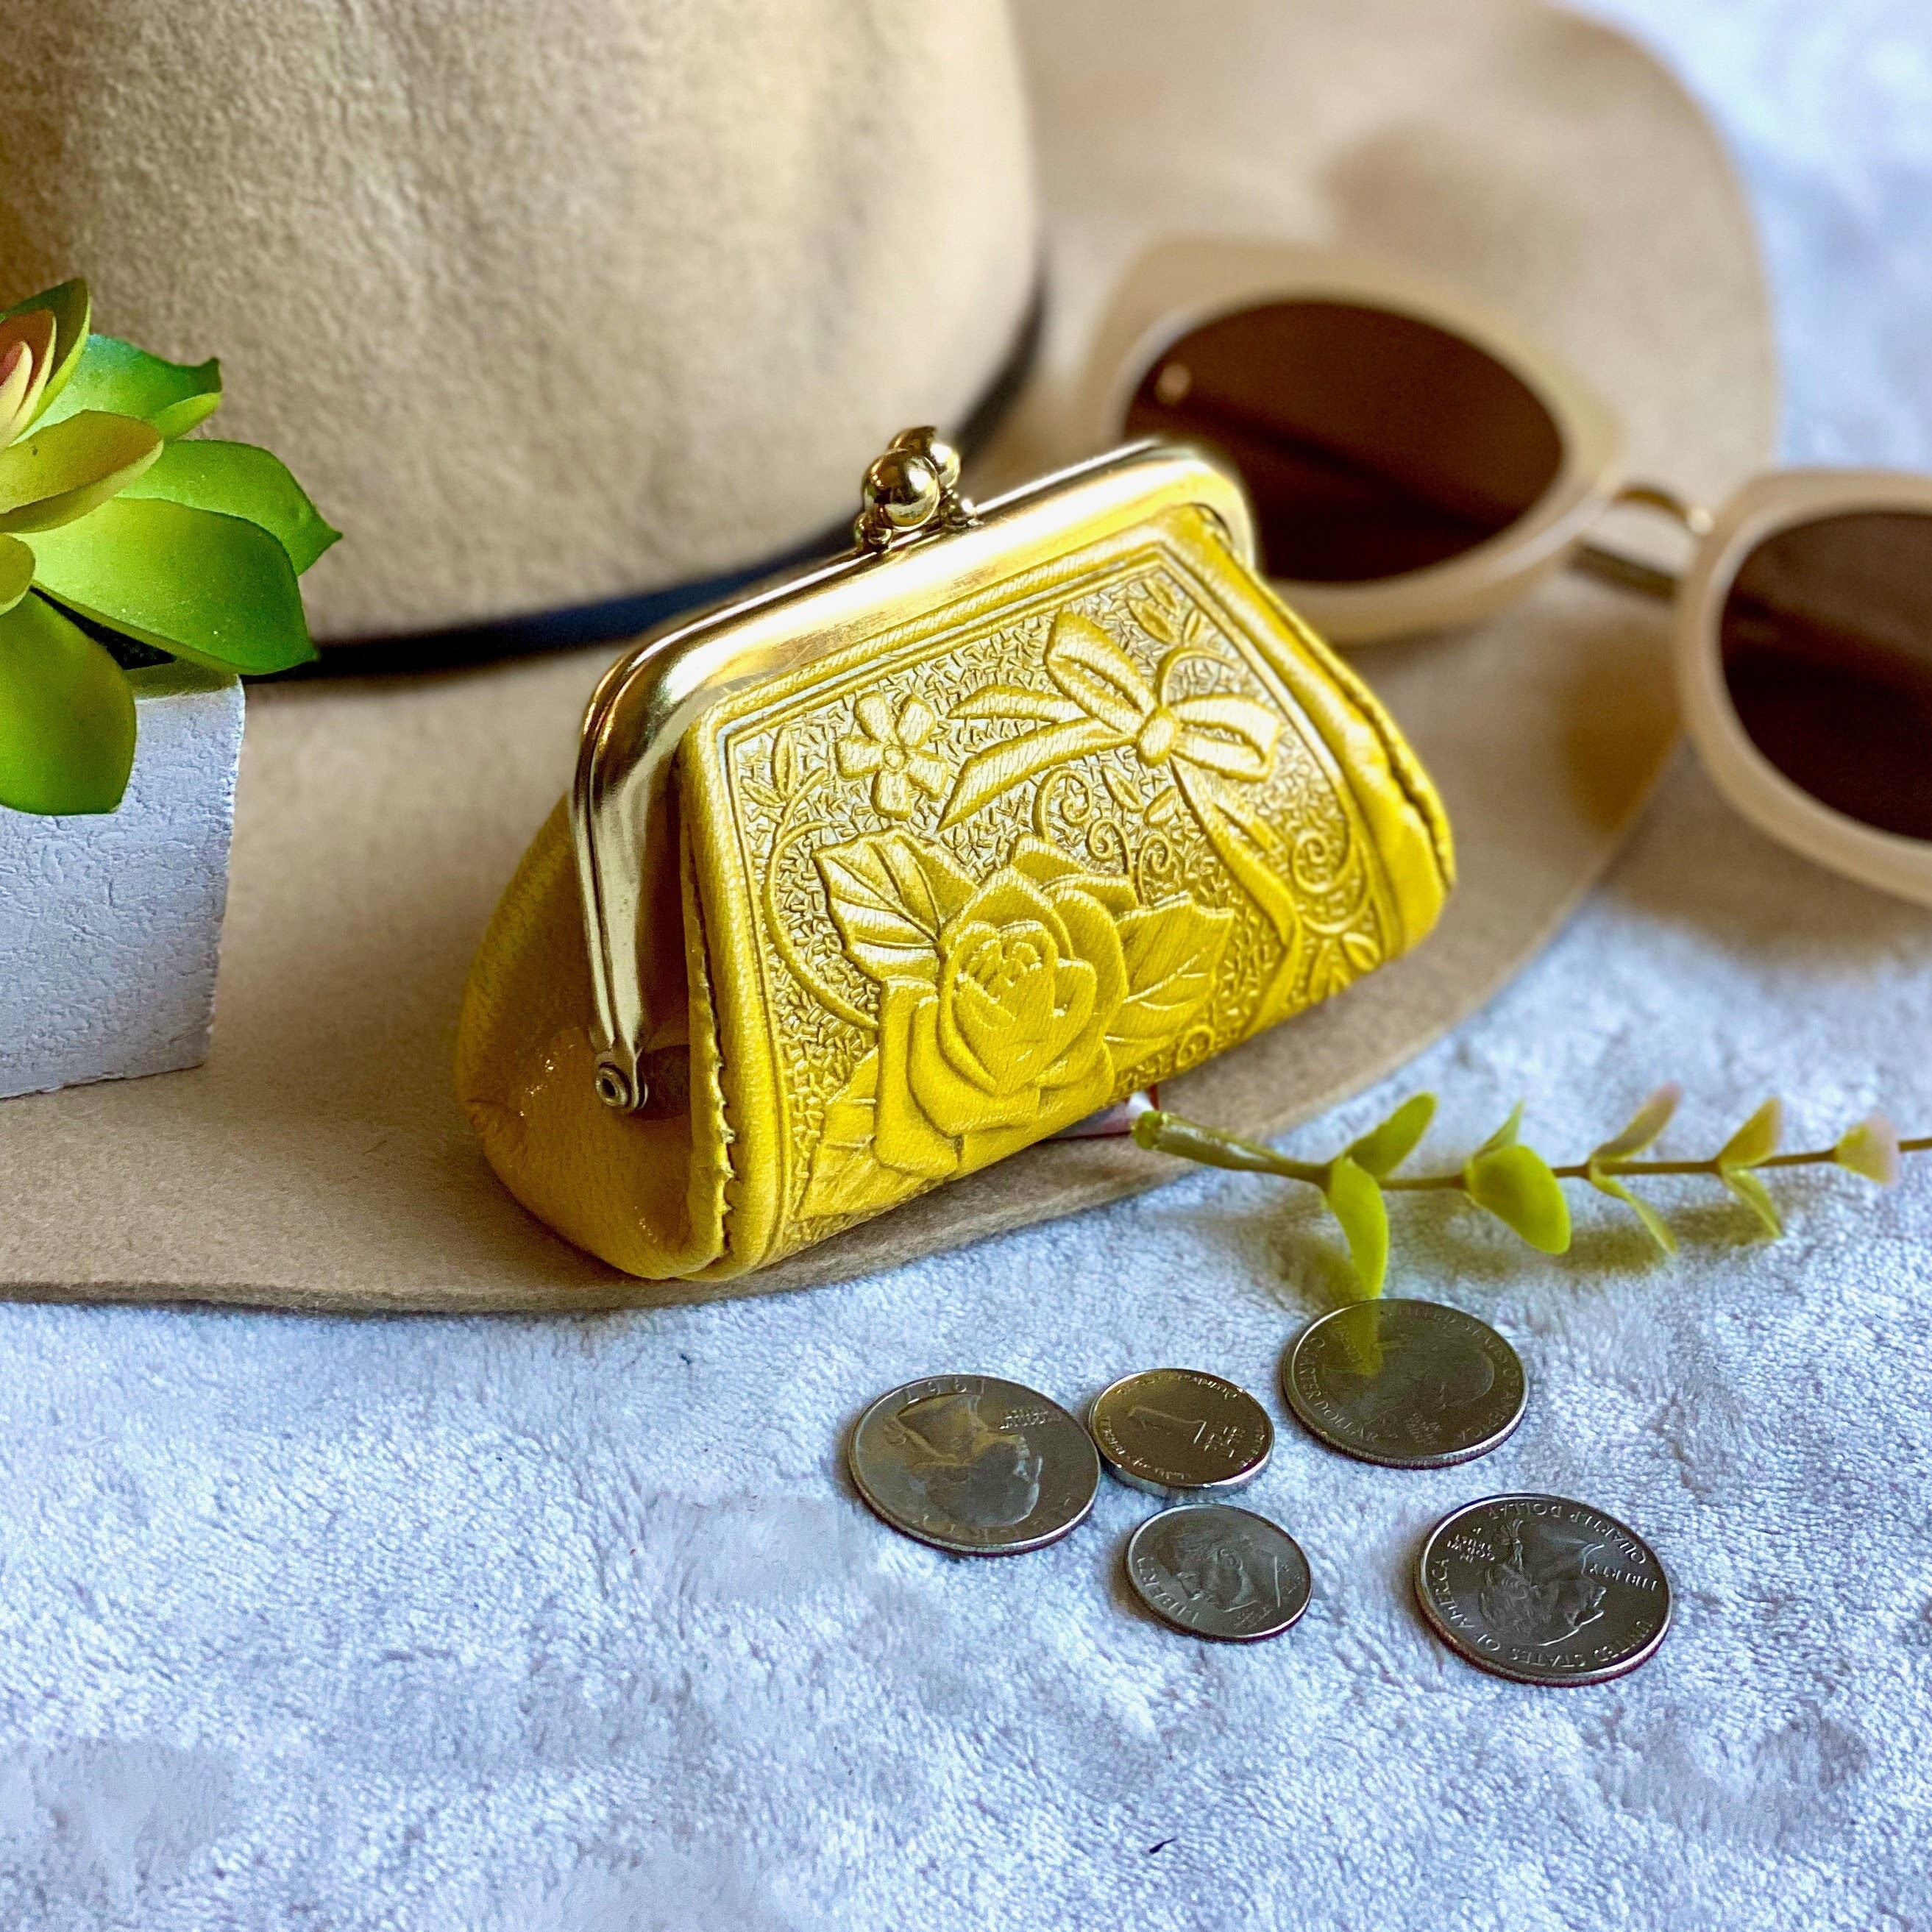 clasp coin purse